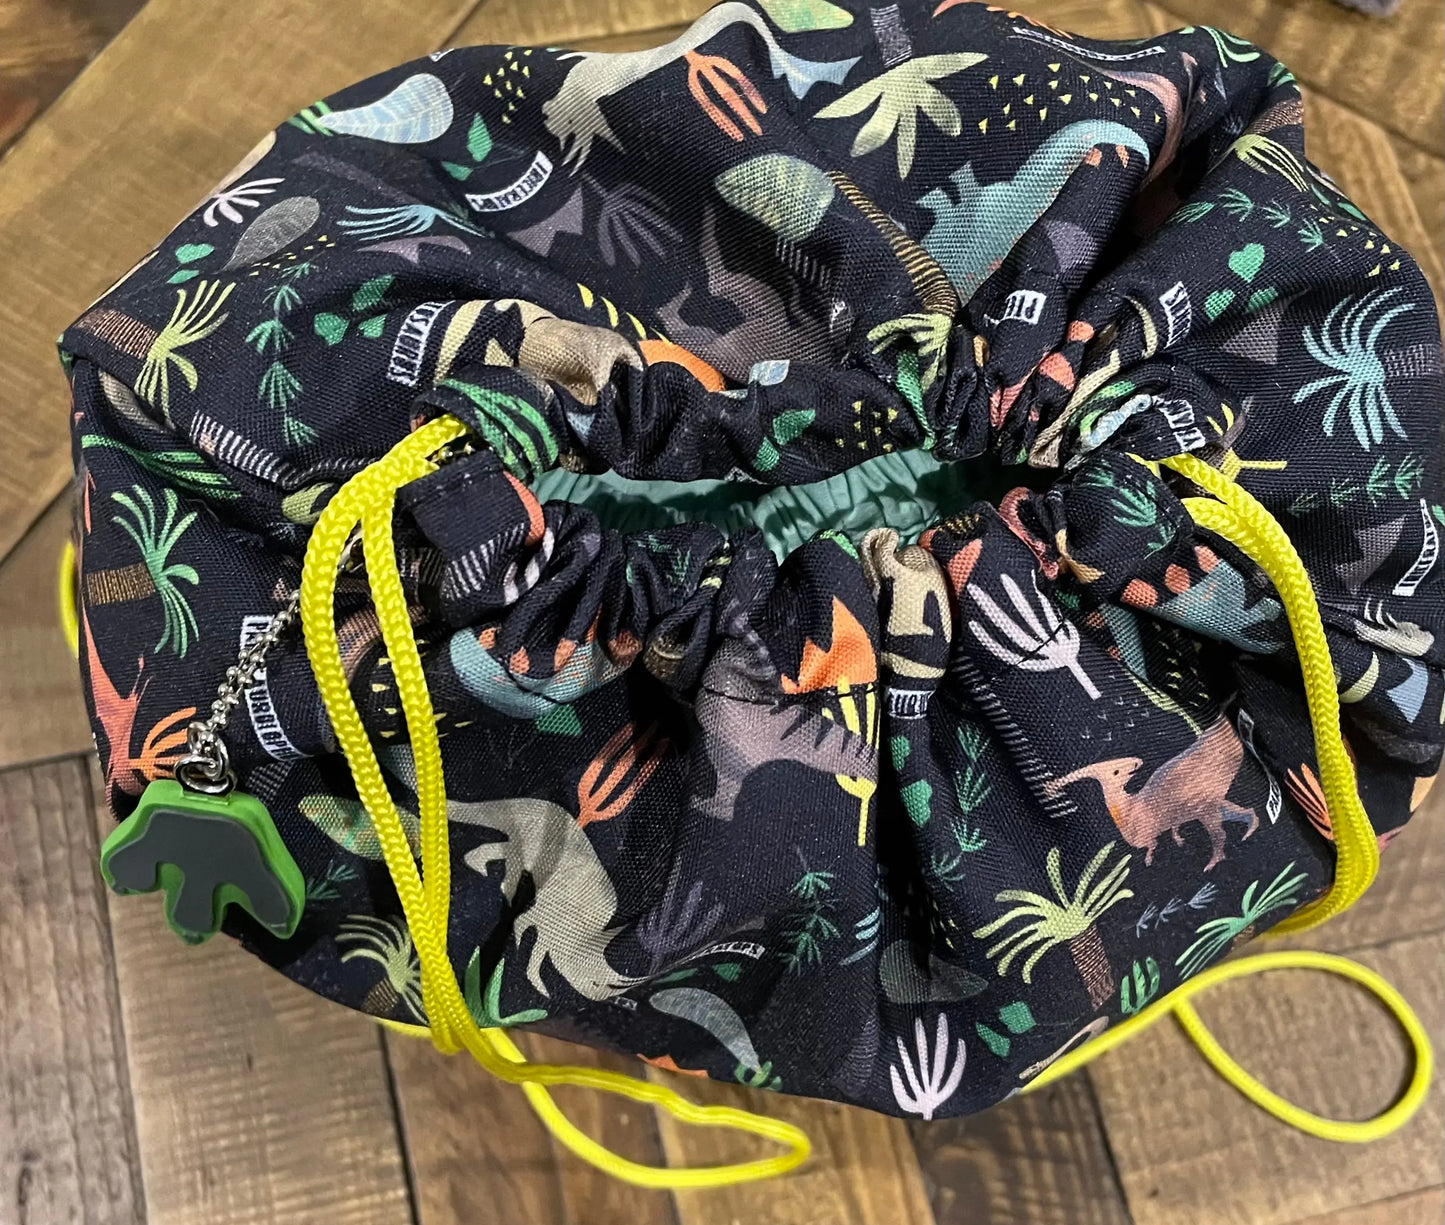 Floss & Rock | Dinosaur School bag | Drawstring Bag - Alder & Alouette